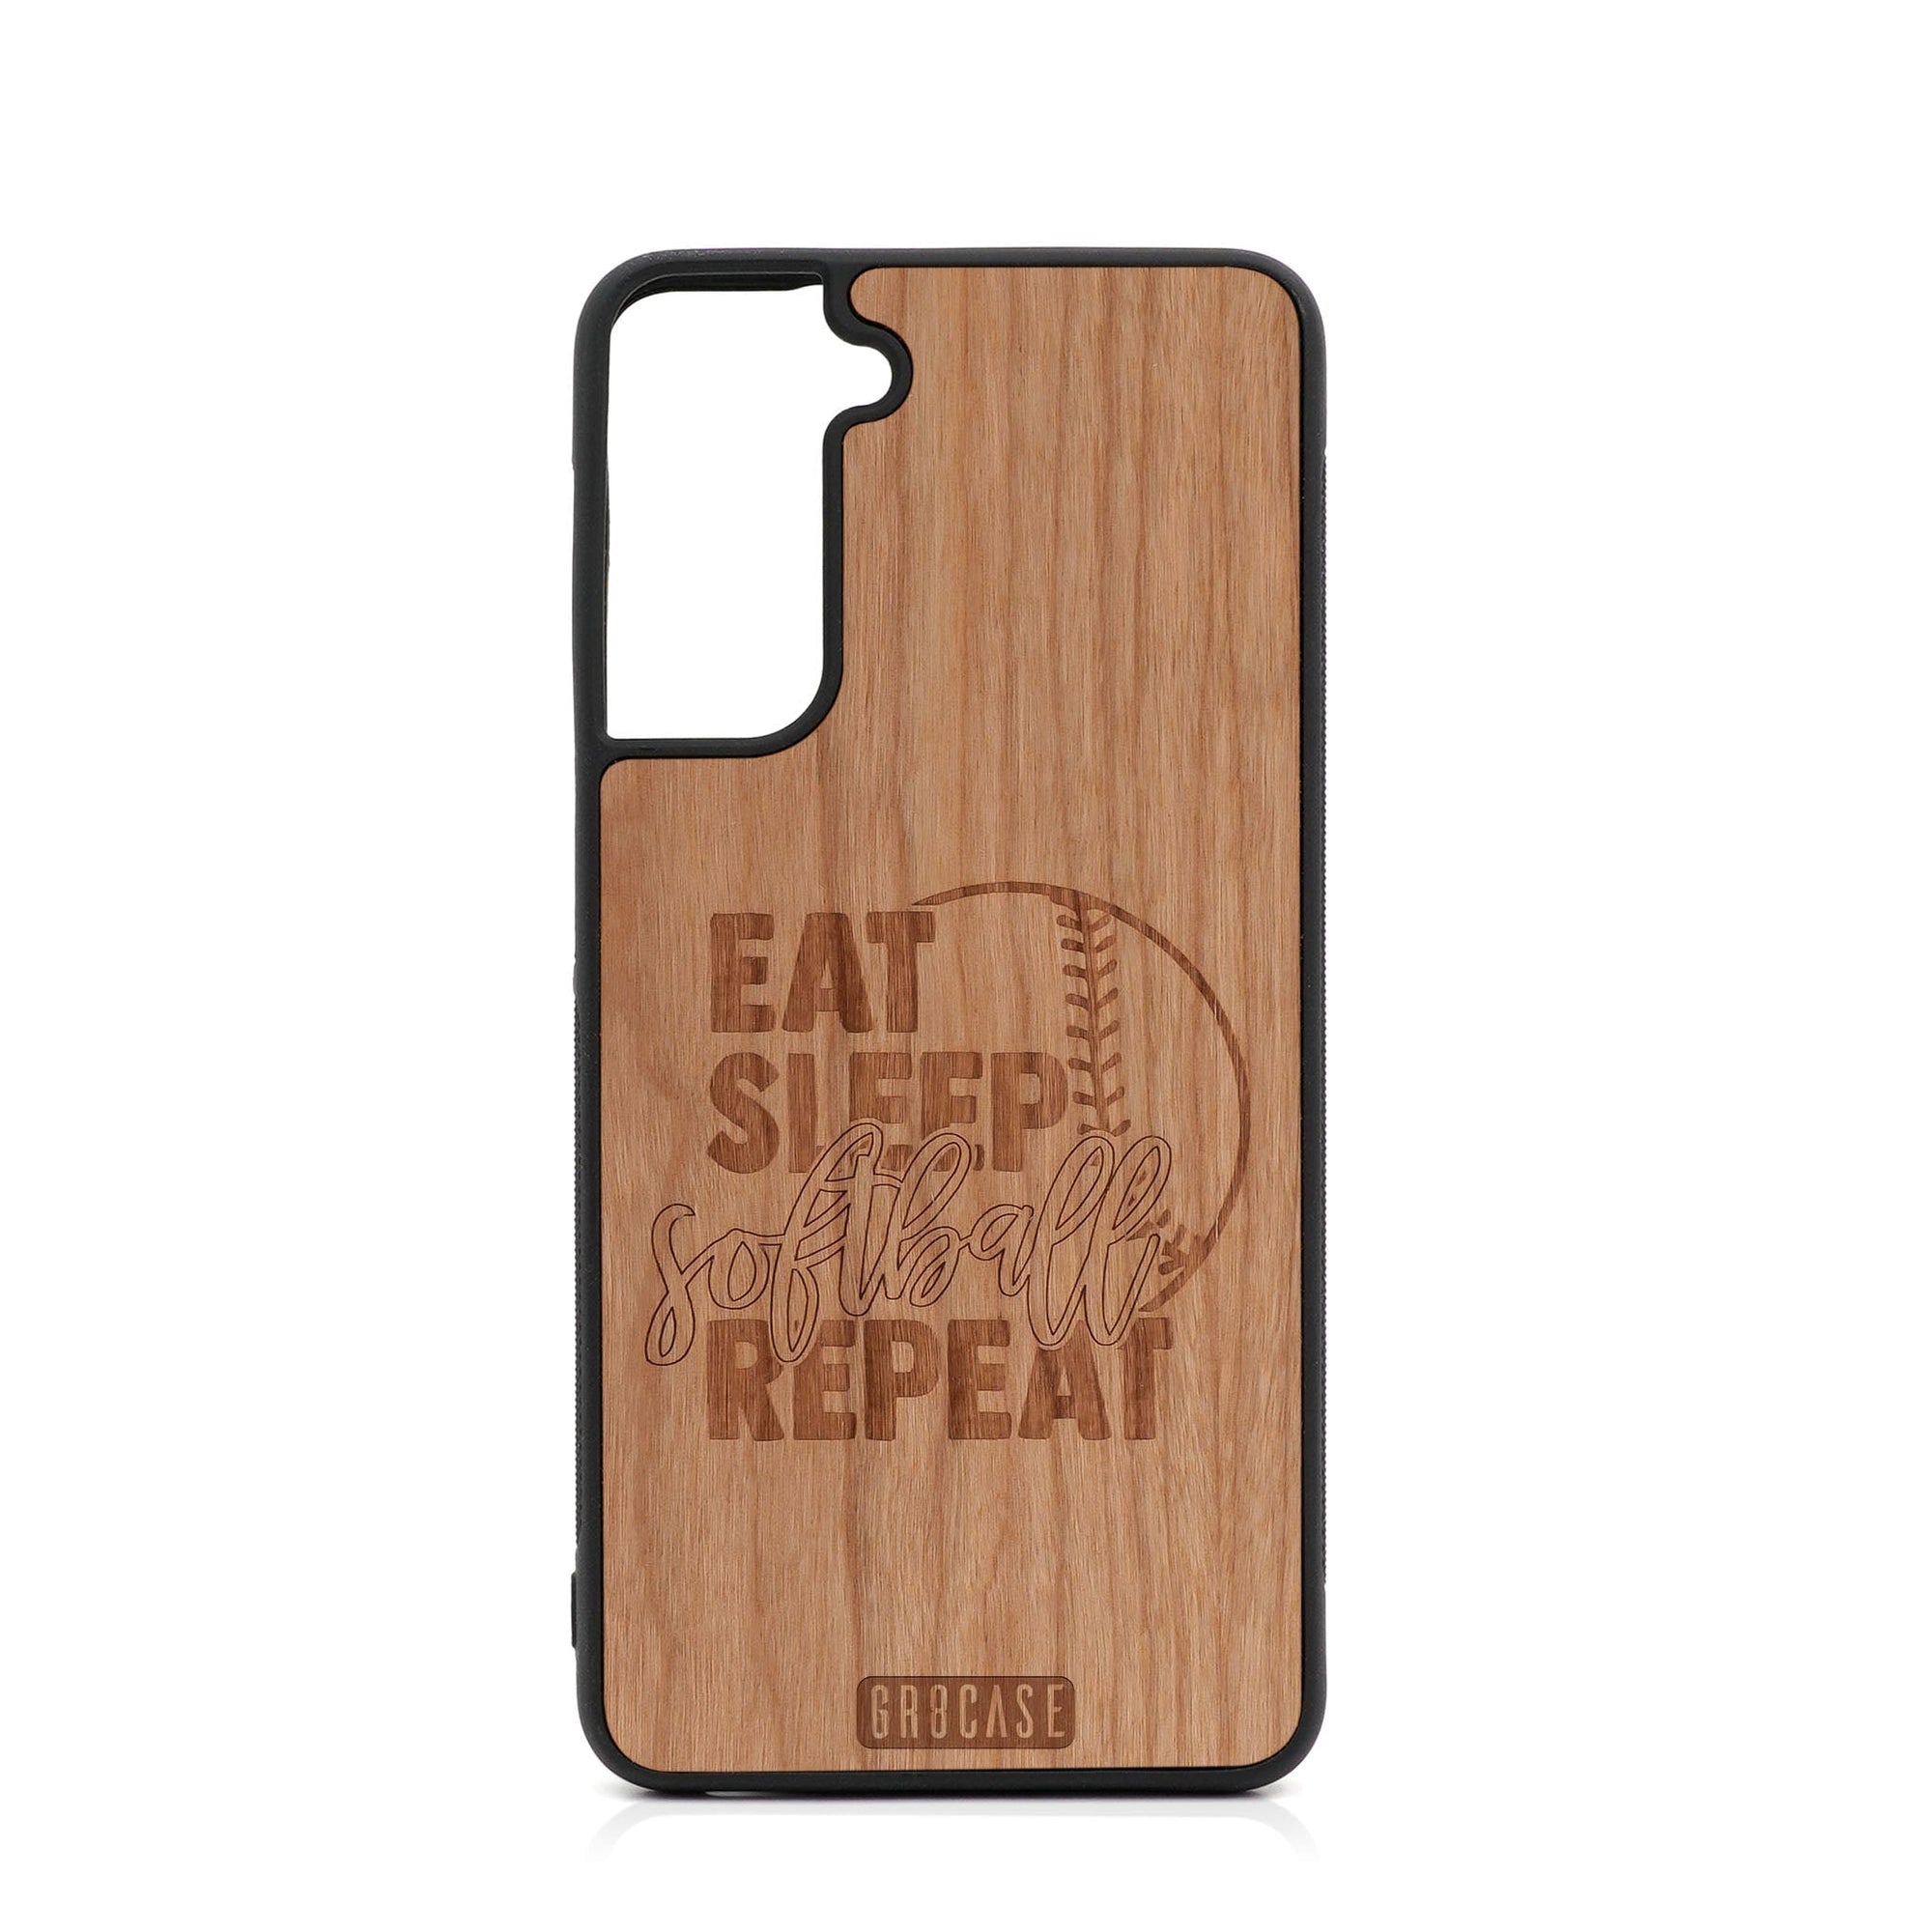 Eat Sleep Softball Repeat Design Wood Case For Samsung Galaxy S21 FE 5G